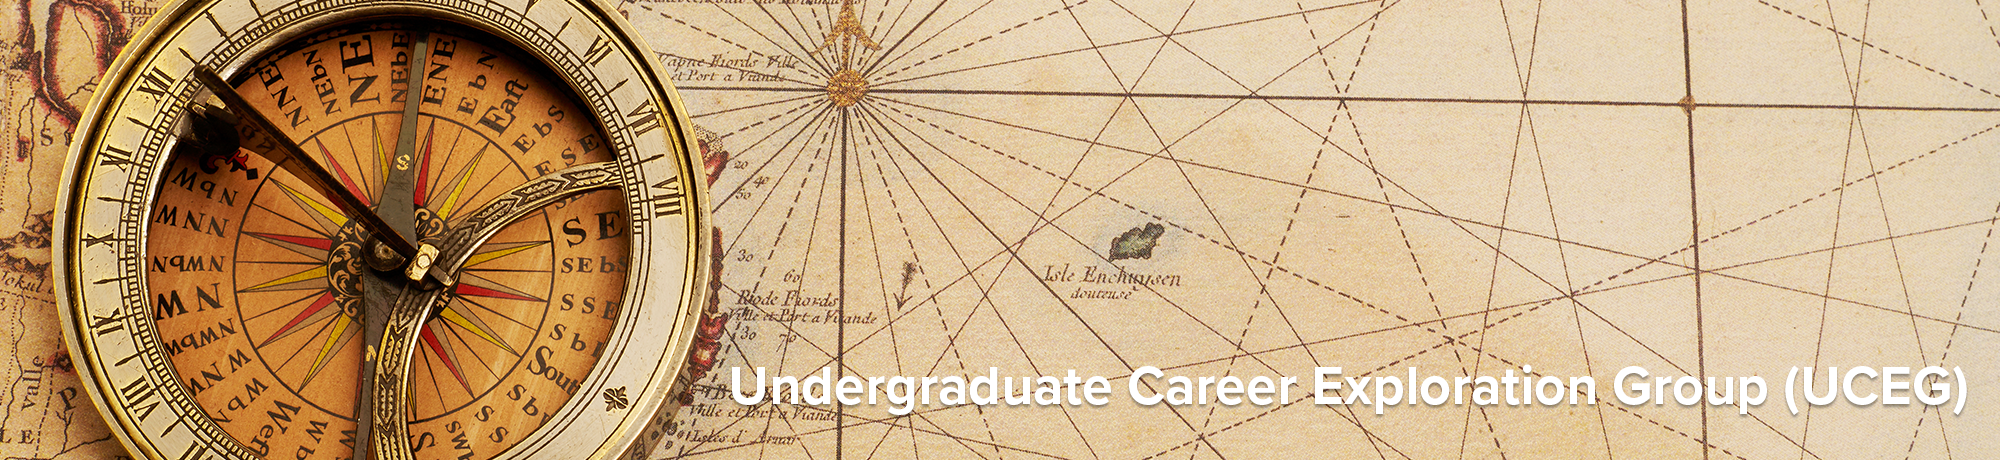 Undergraduate Career Exploration Group (UCEG) Banner